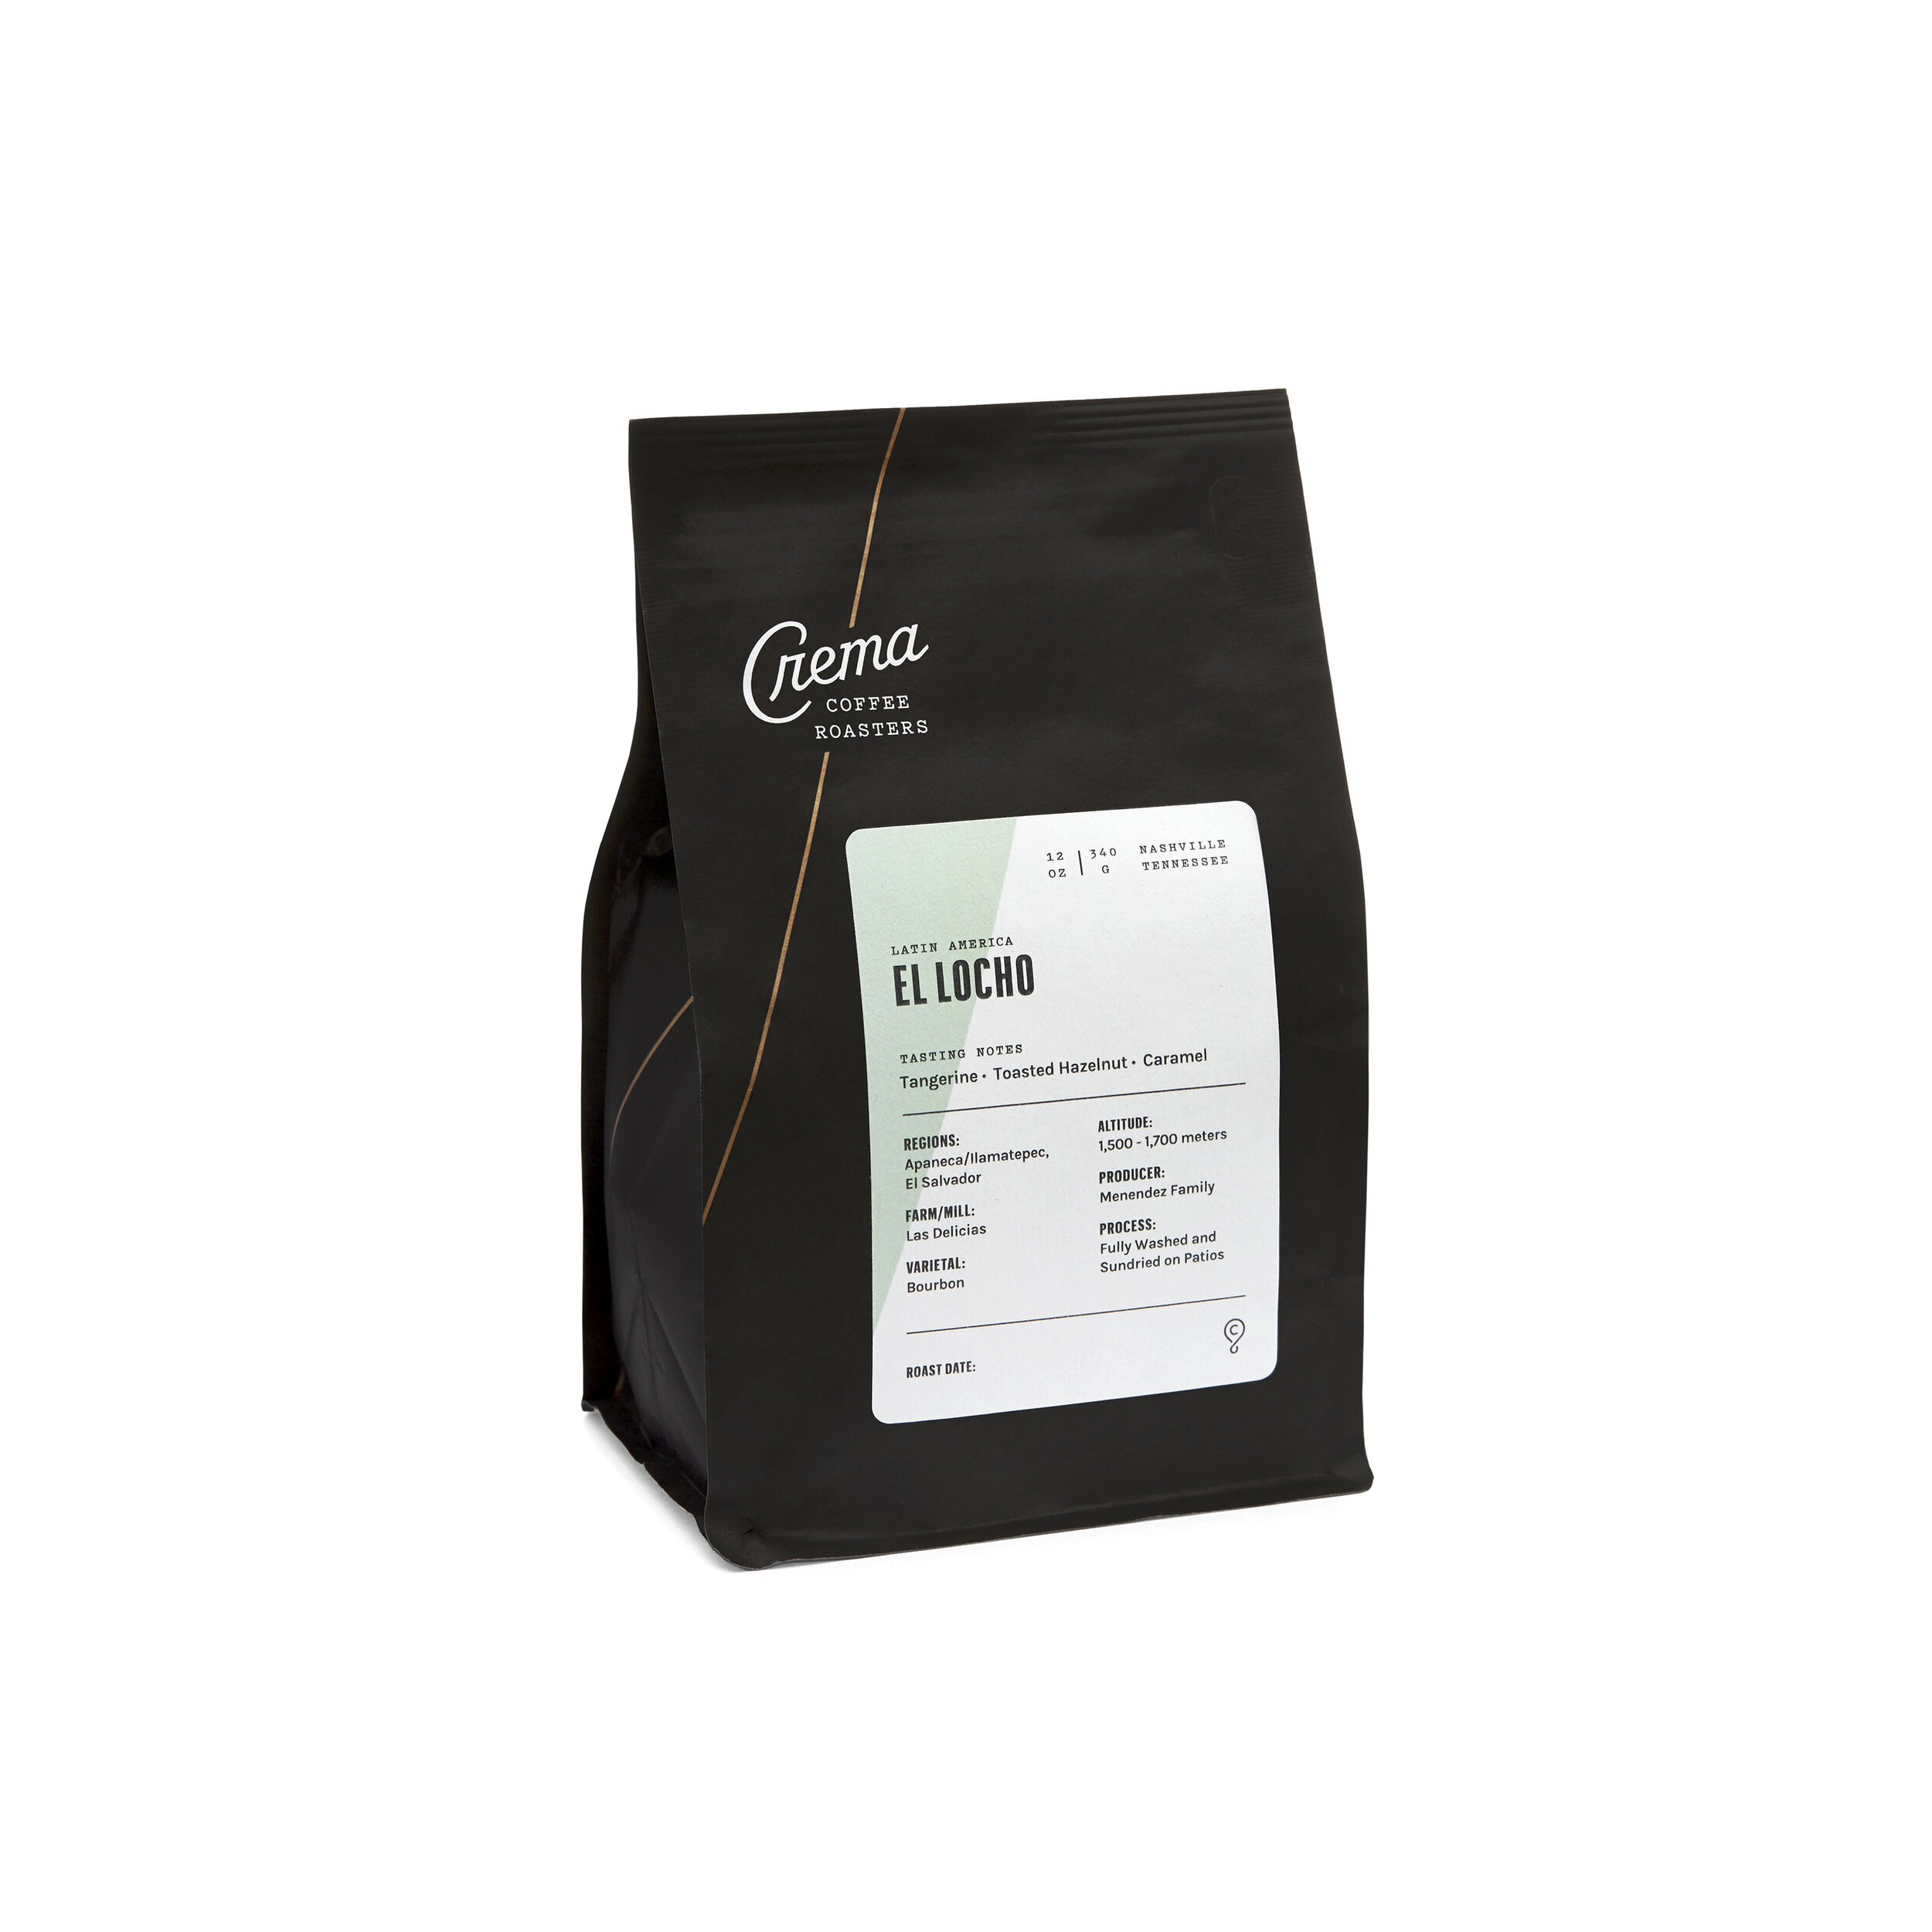 on-white-coffee-bag-crema-product-photo-example